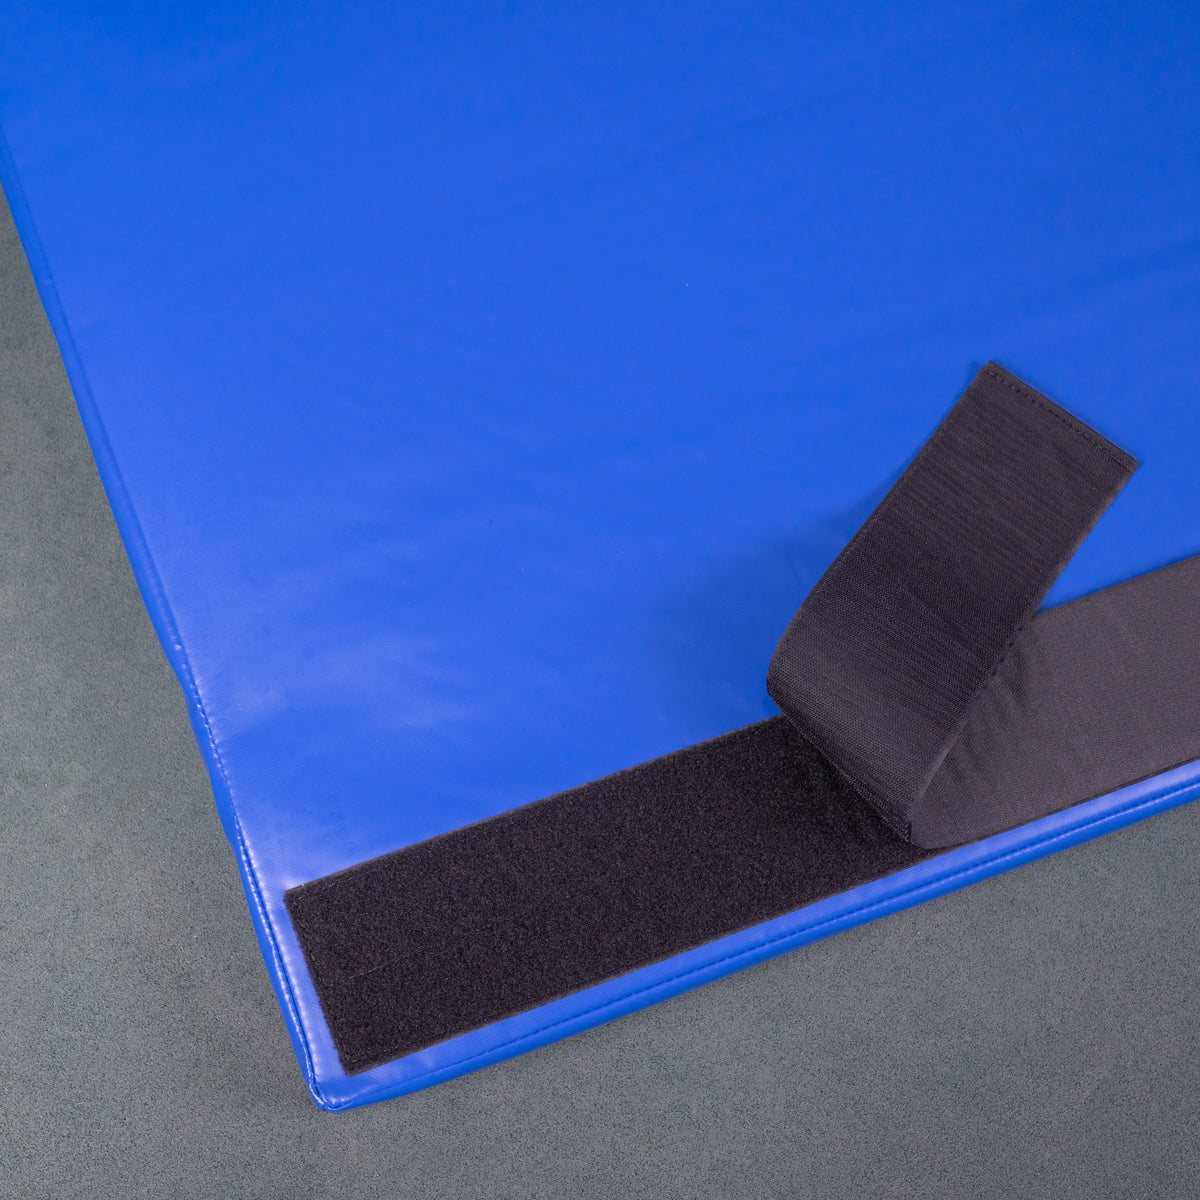 MEMAX Wall Protection Pads for Gym Wall Padding Basketball Wall Mat Pad 5cm Thick Foam Gym Wall Pad